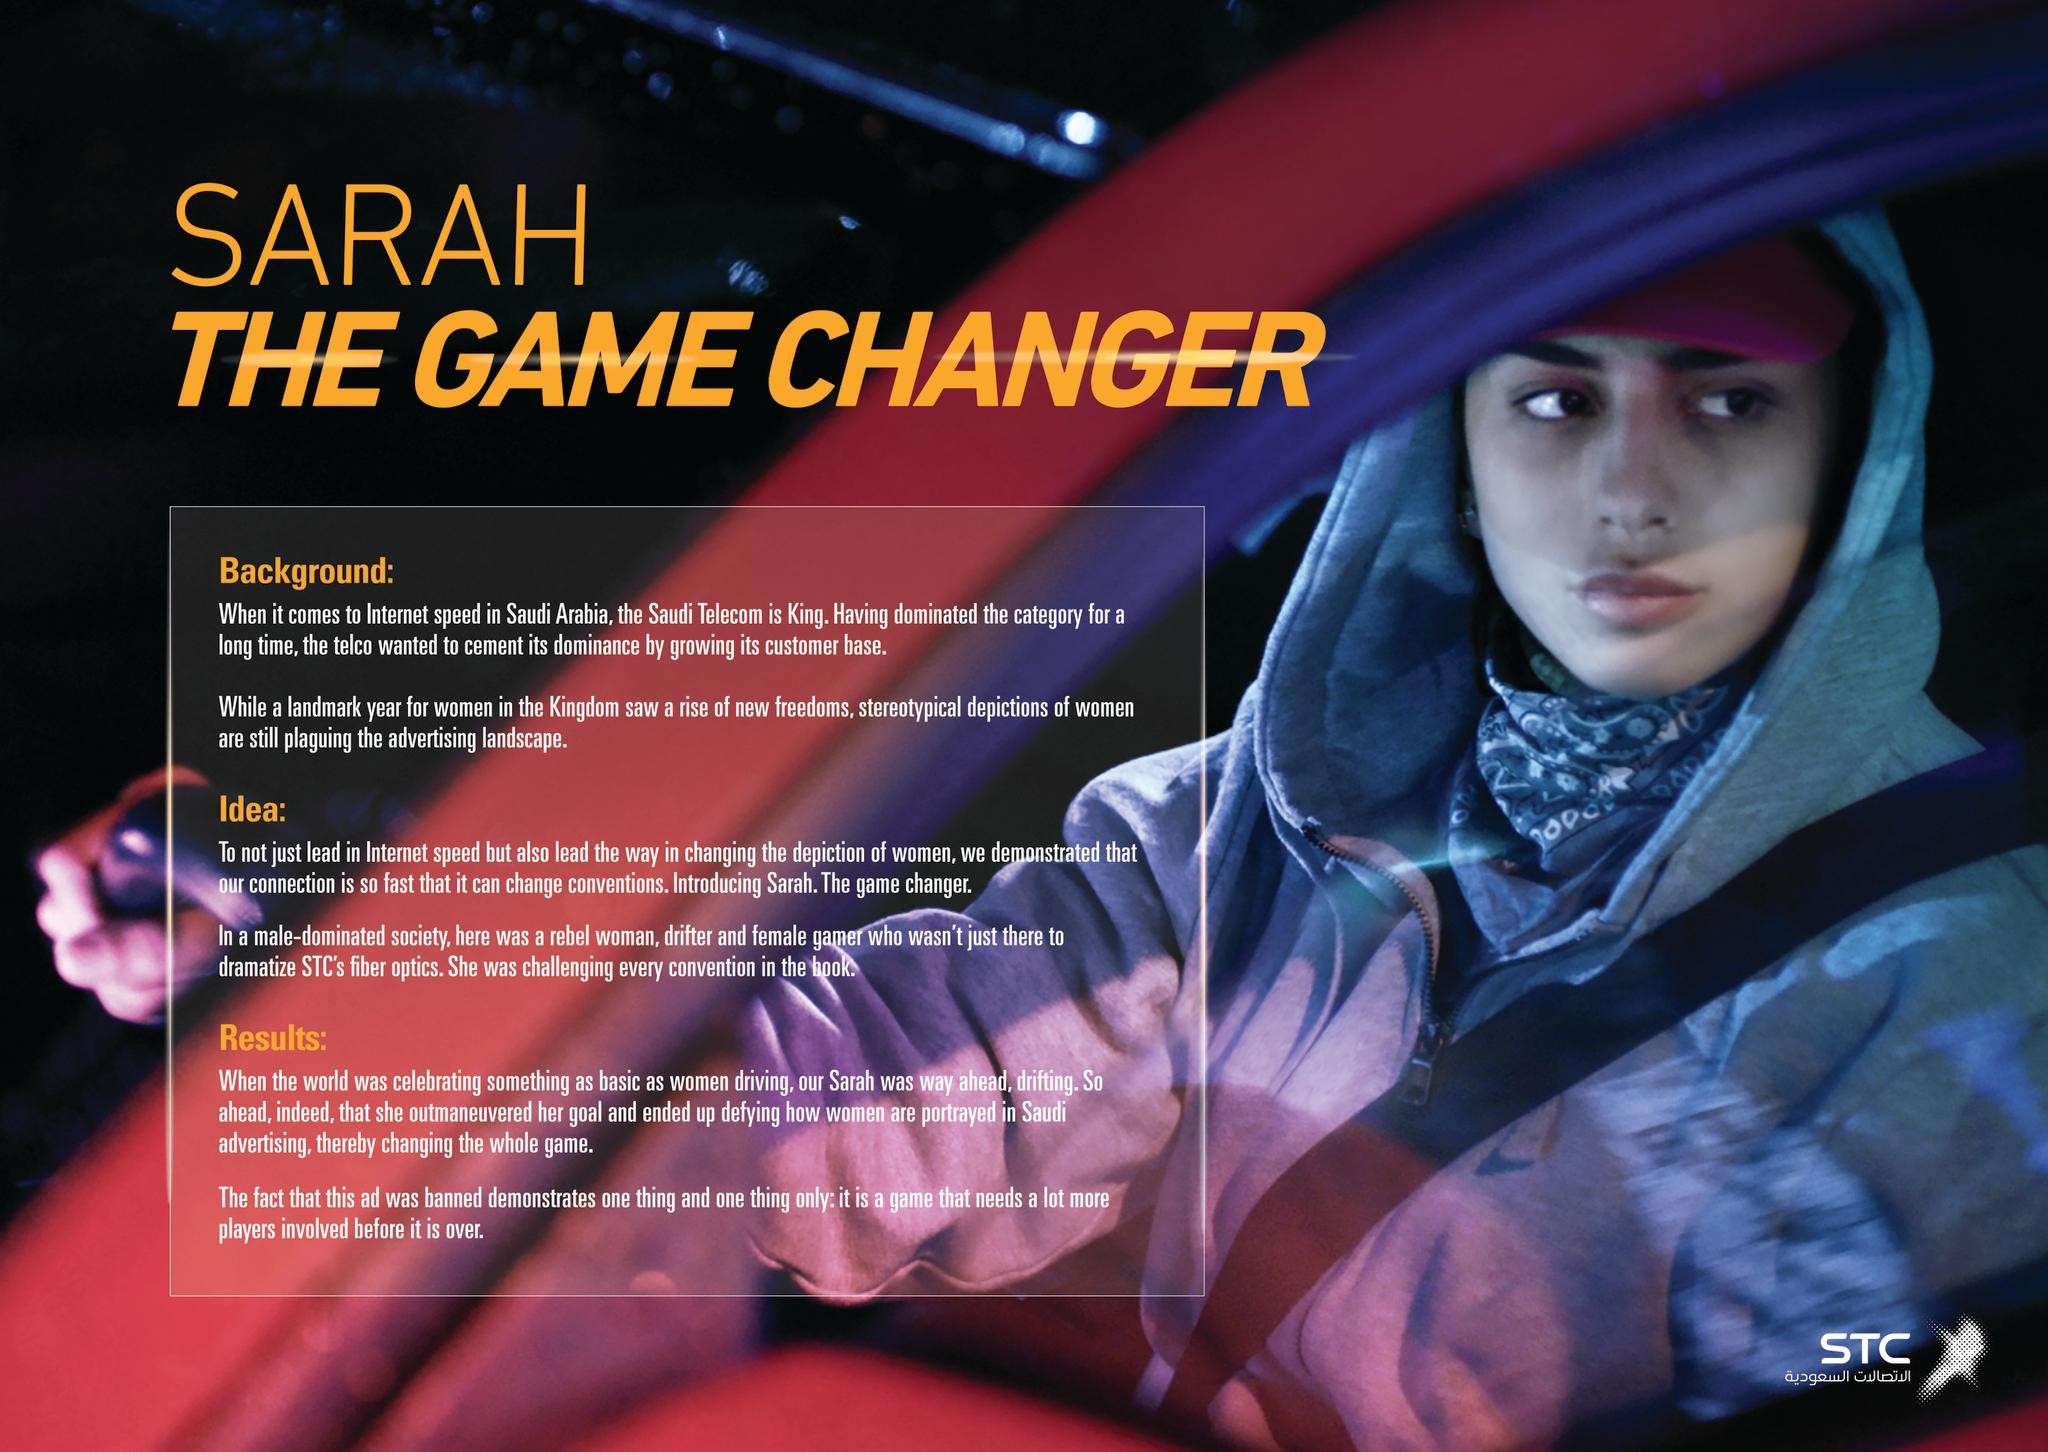  Sarah. The Game Changer